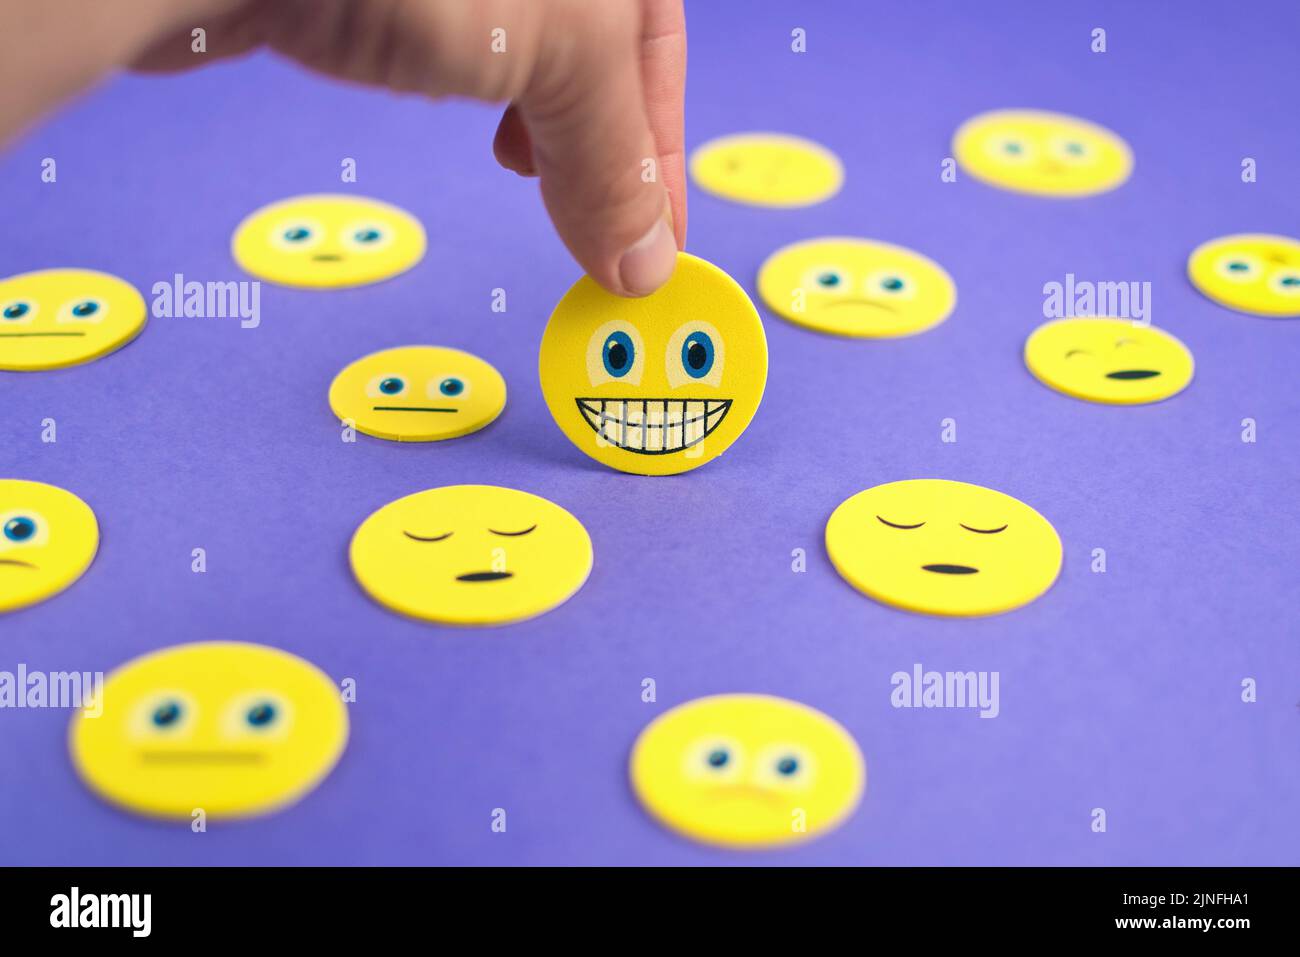 Closeup shot of hand holding yellow smiley face emoji between sad emojis on purple background background Stock Photo